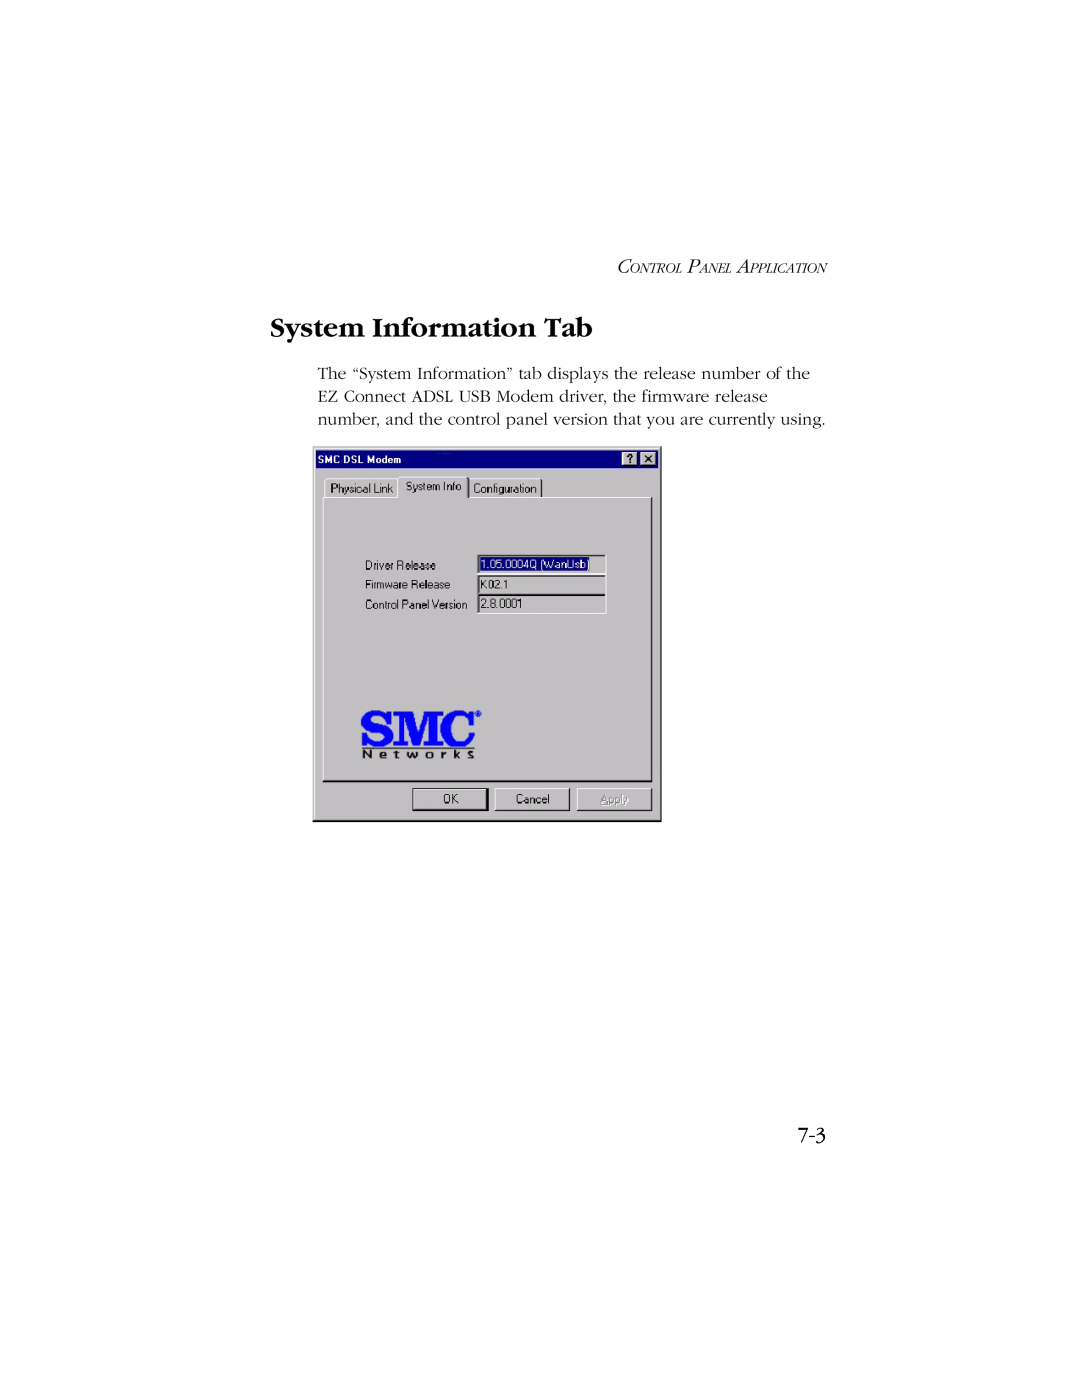 SMC Networks SMC7003-USB manual System Information Tab, Control Panel Application 